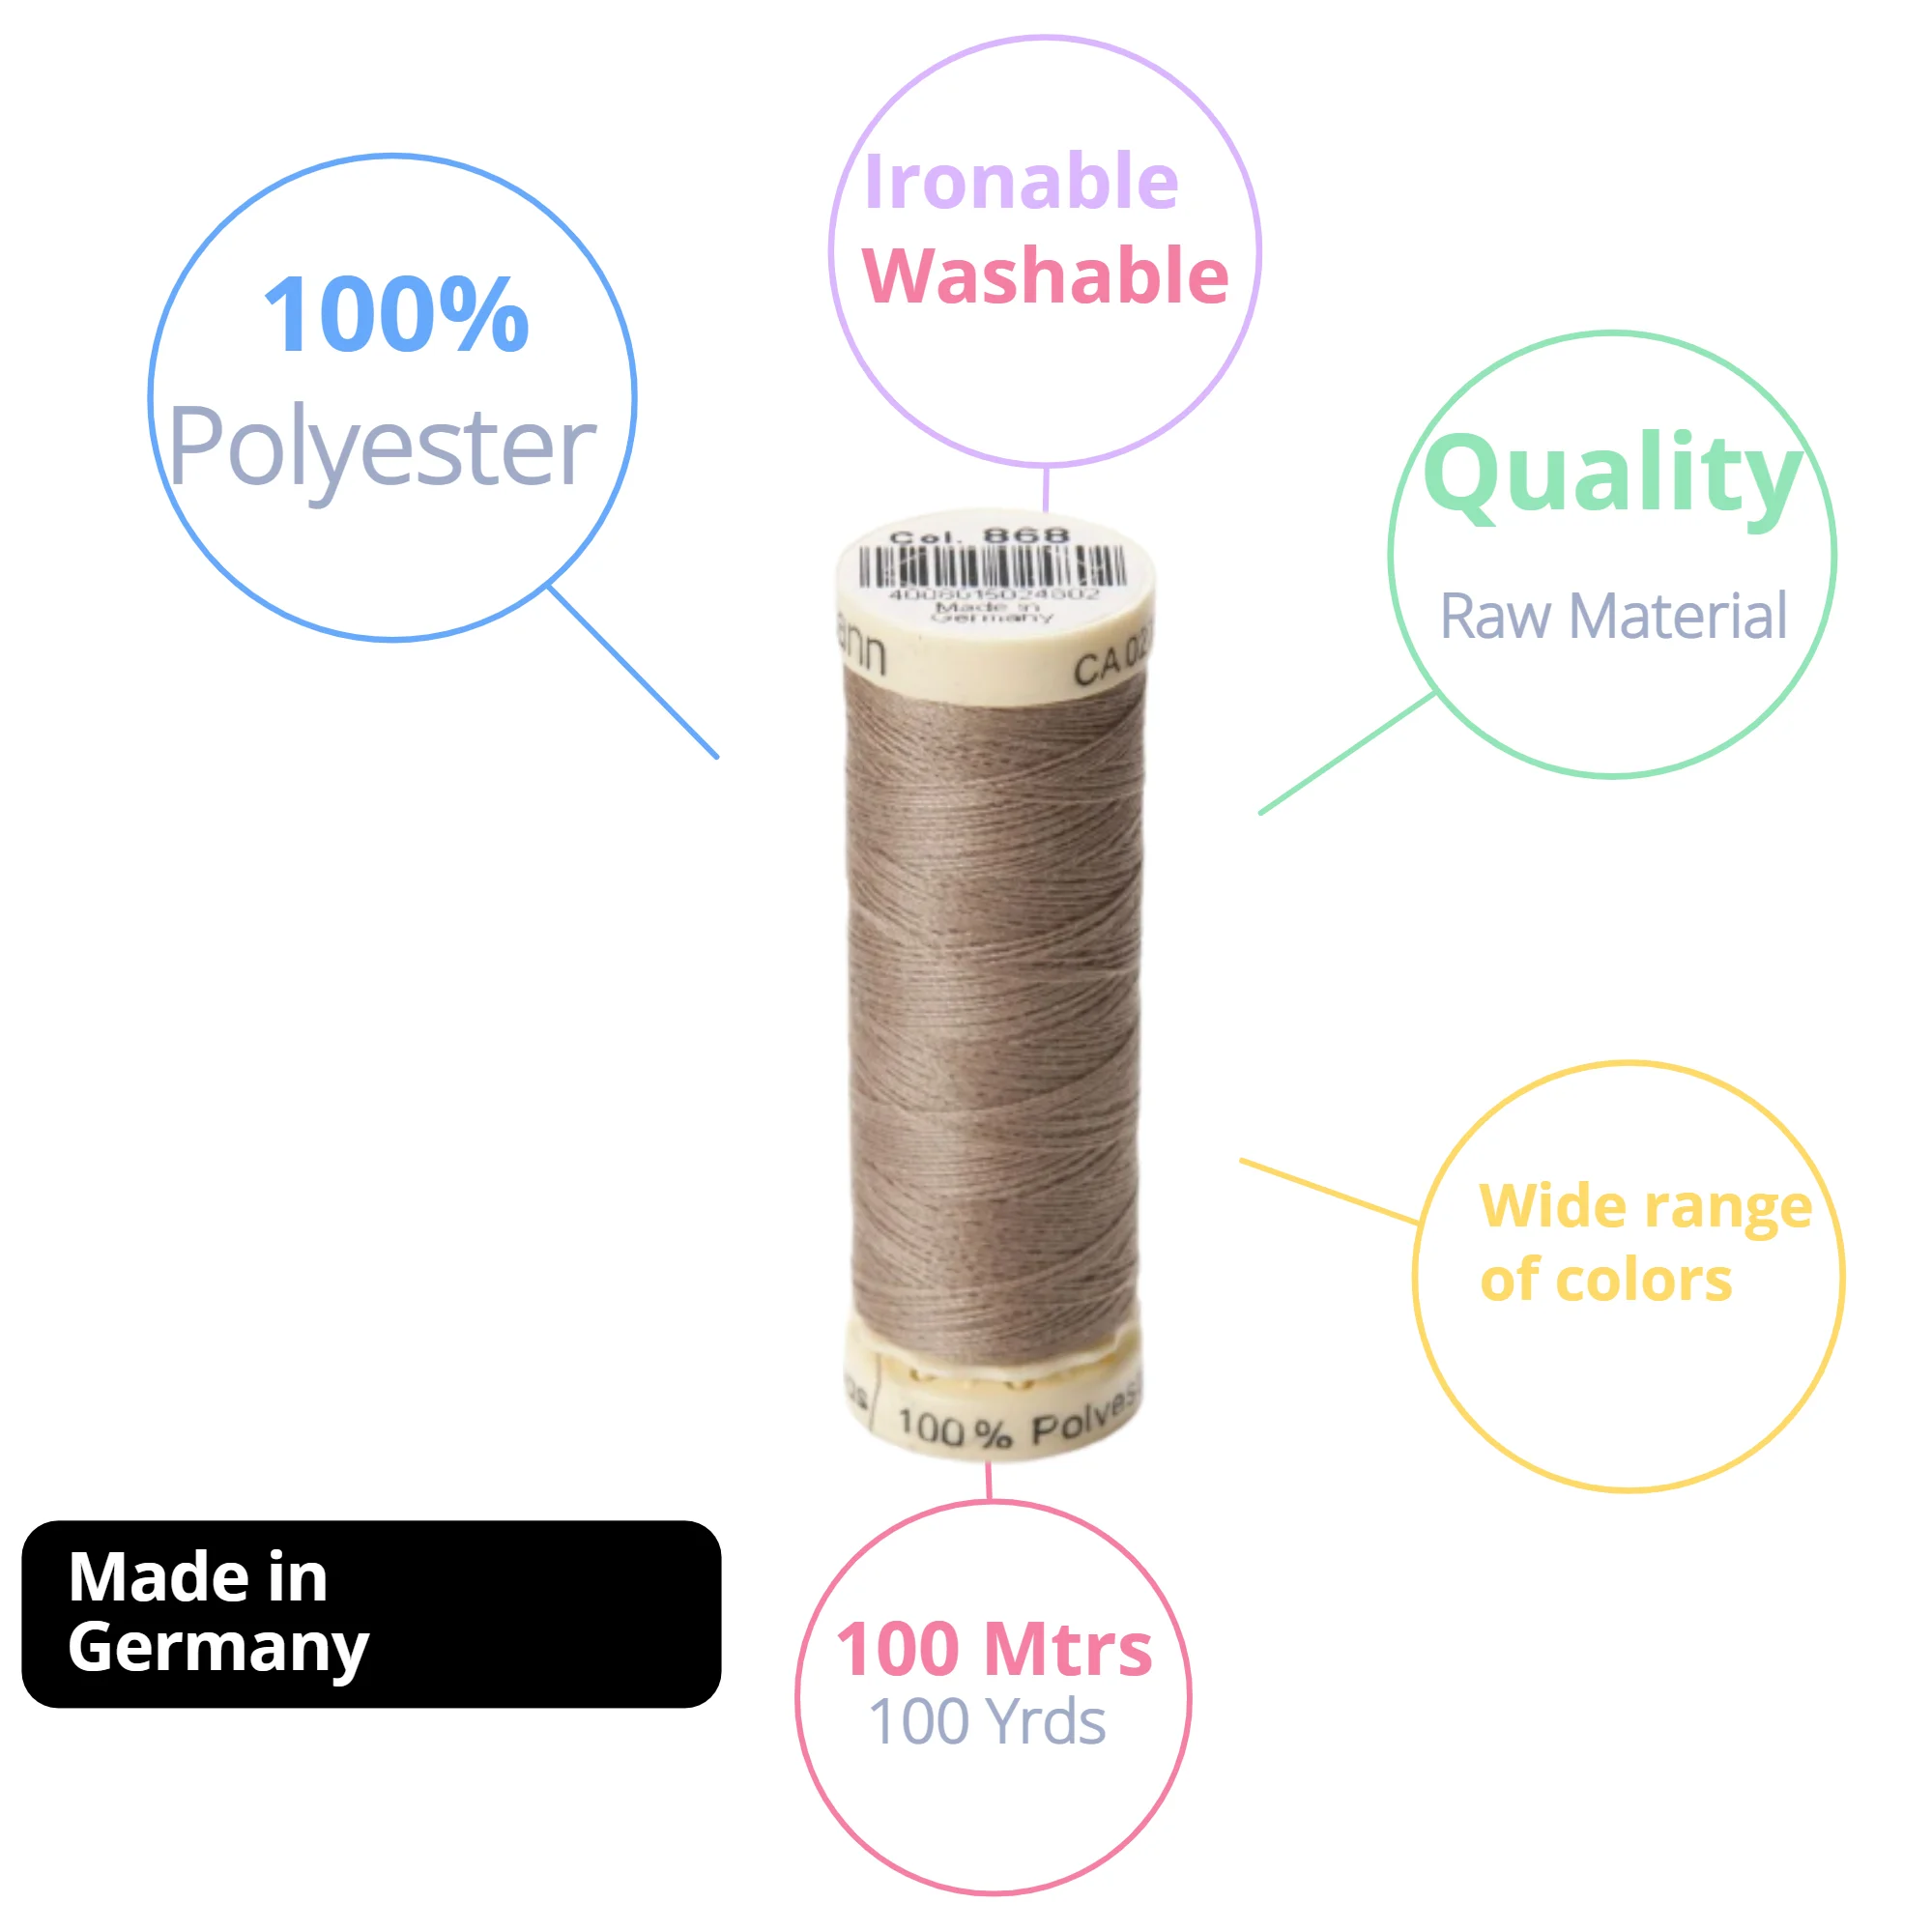 

Gutermann Polyester Sew-All Purpose Thread, 100m/110 Yd,